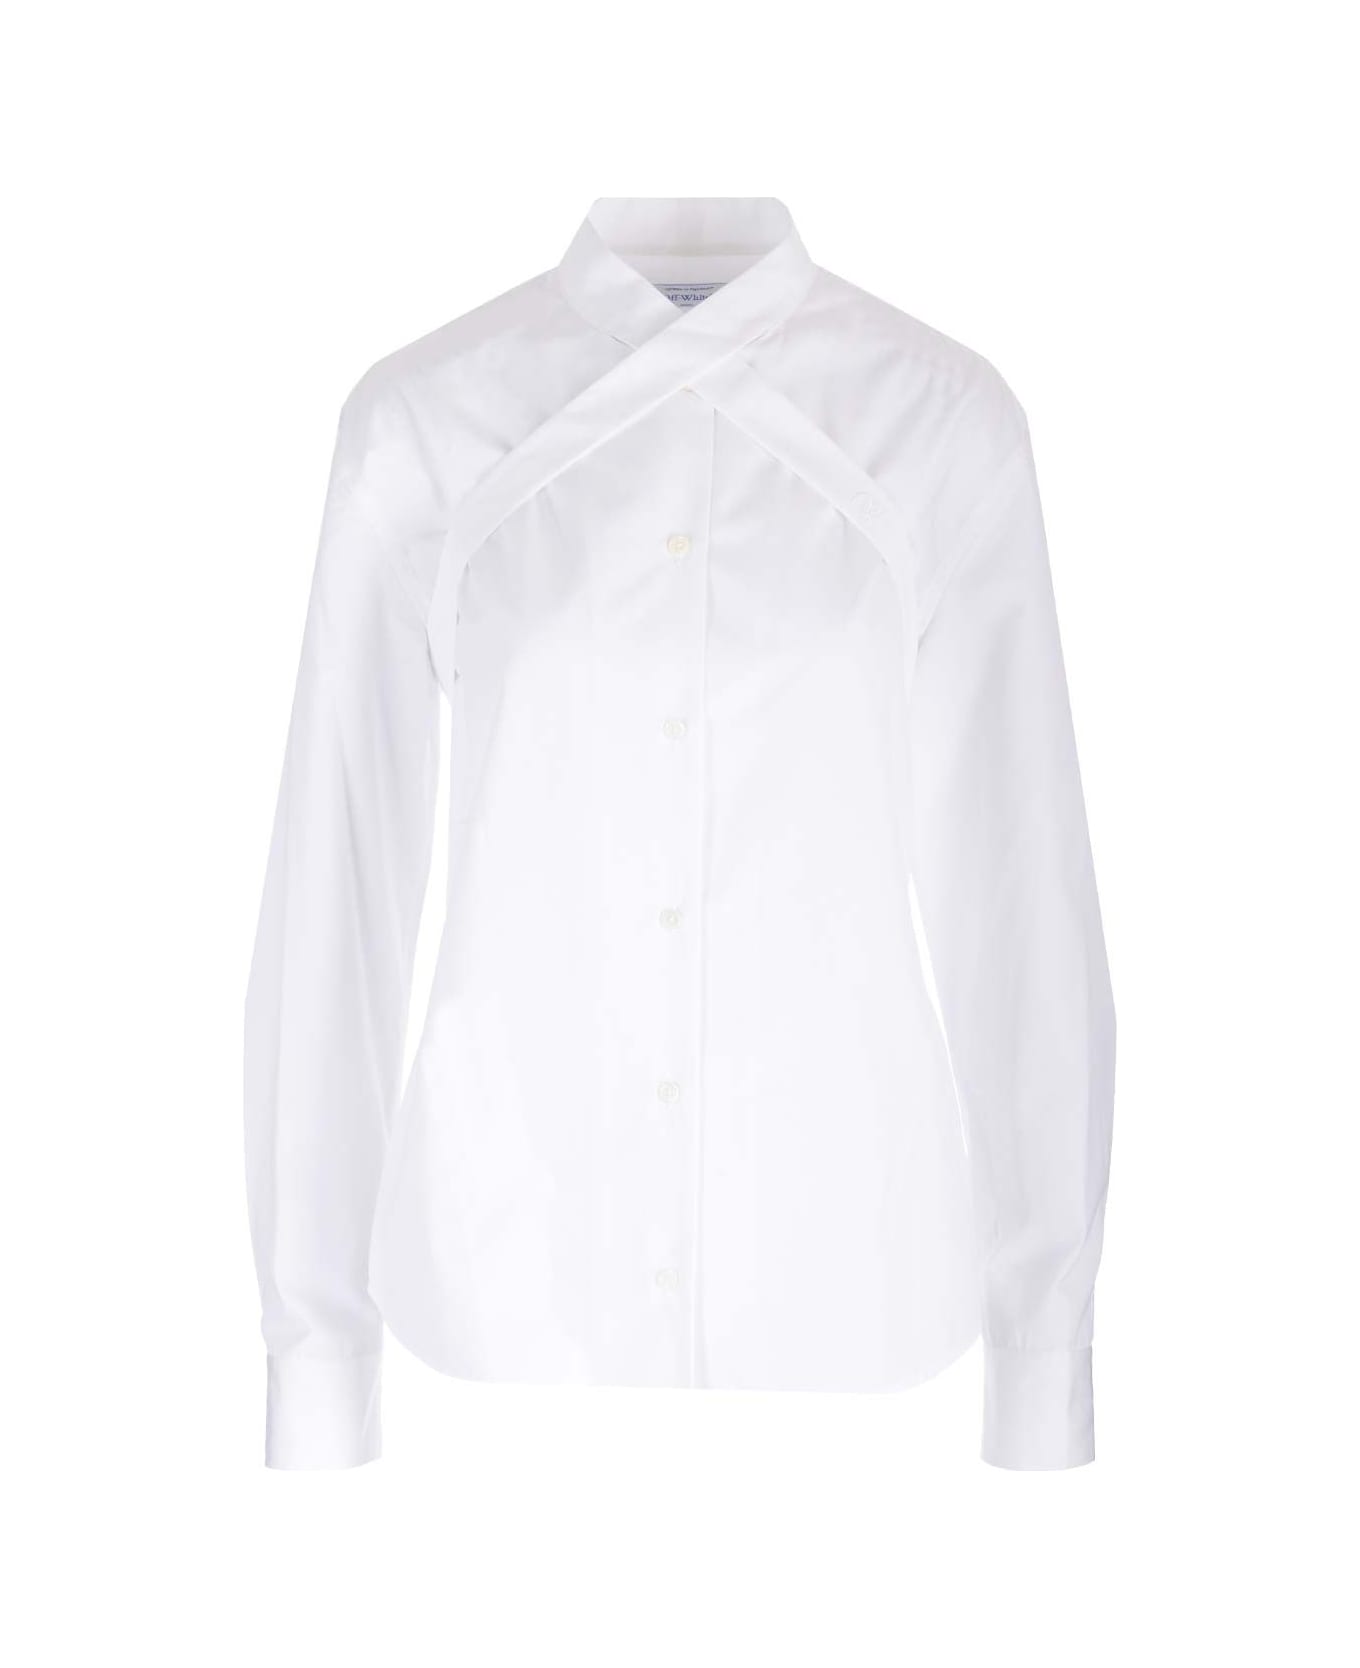 Off-White Harness Collar Shirt - White